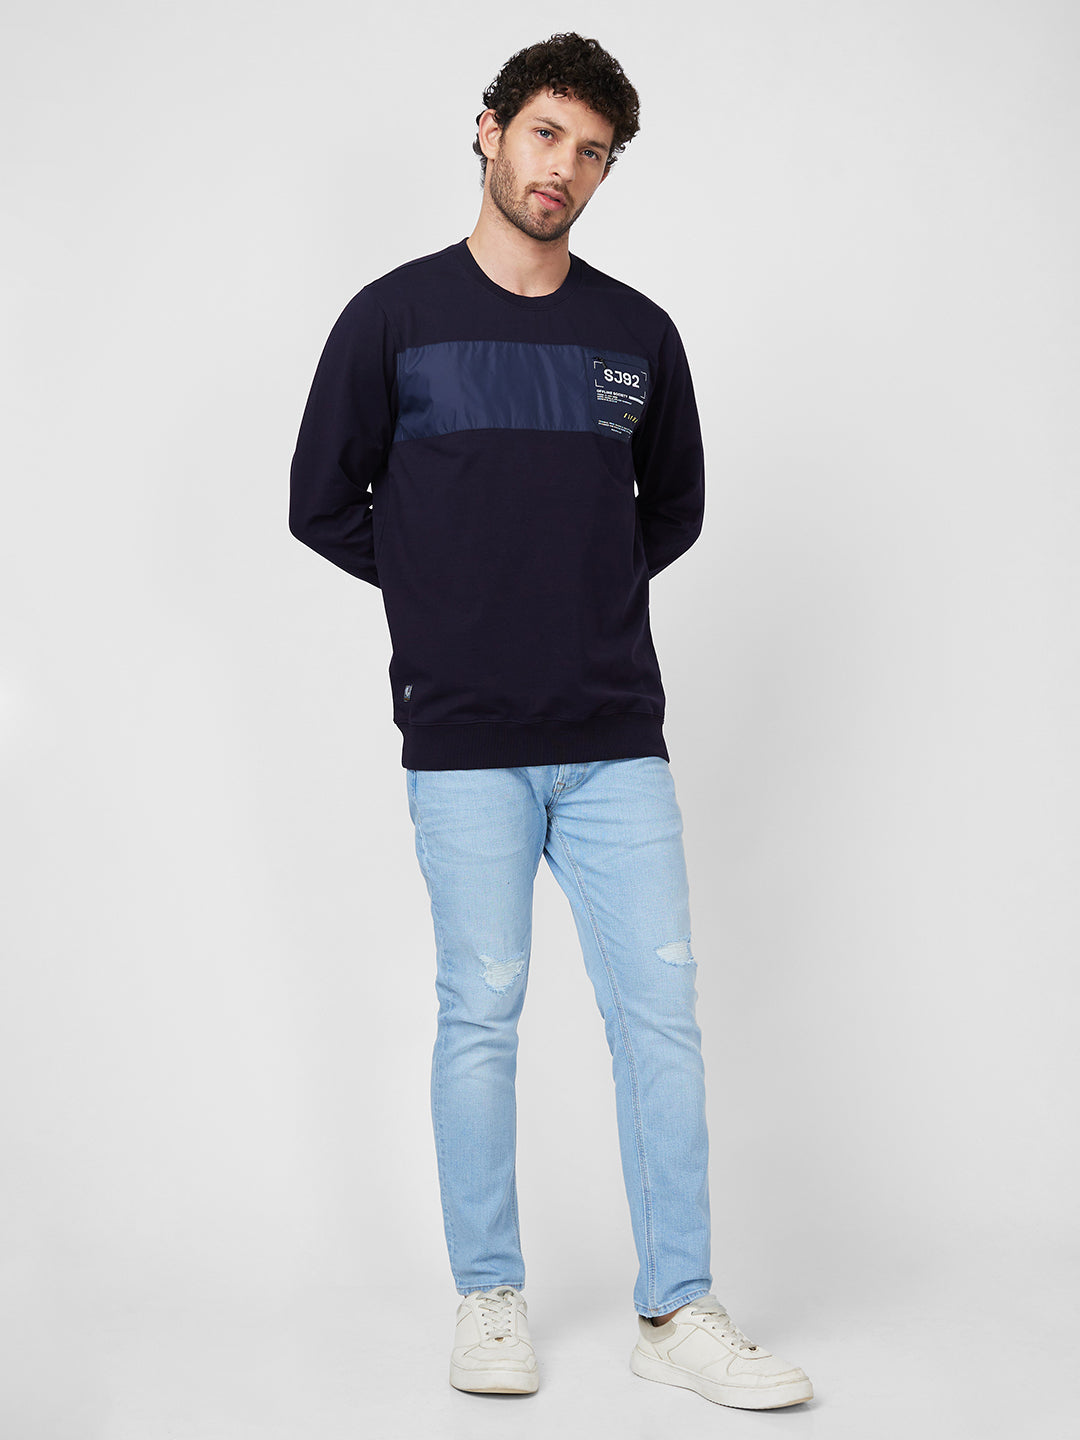 Spykar Slim Fit Round Neck Full Sleeve Blue Sweatshirt For Men